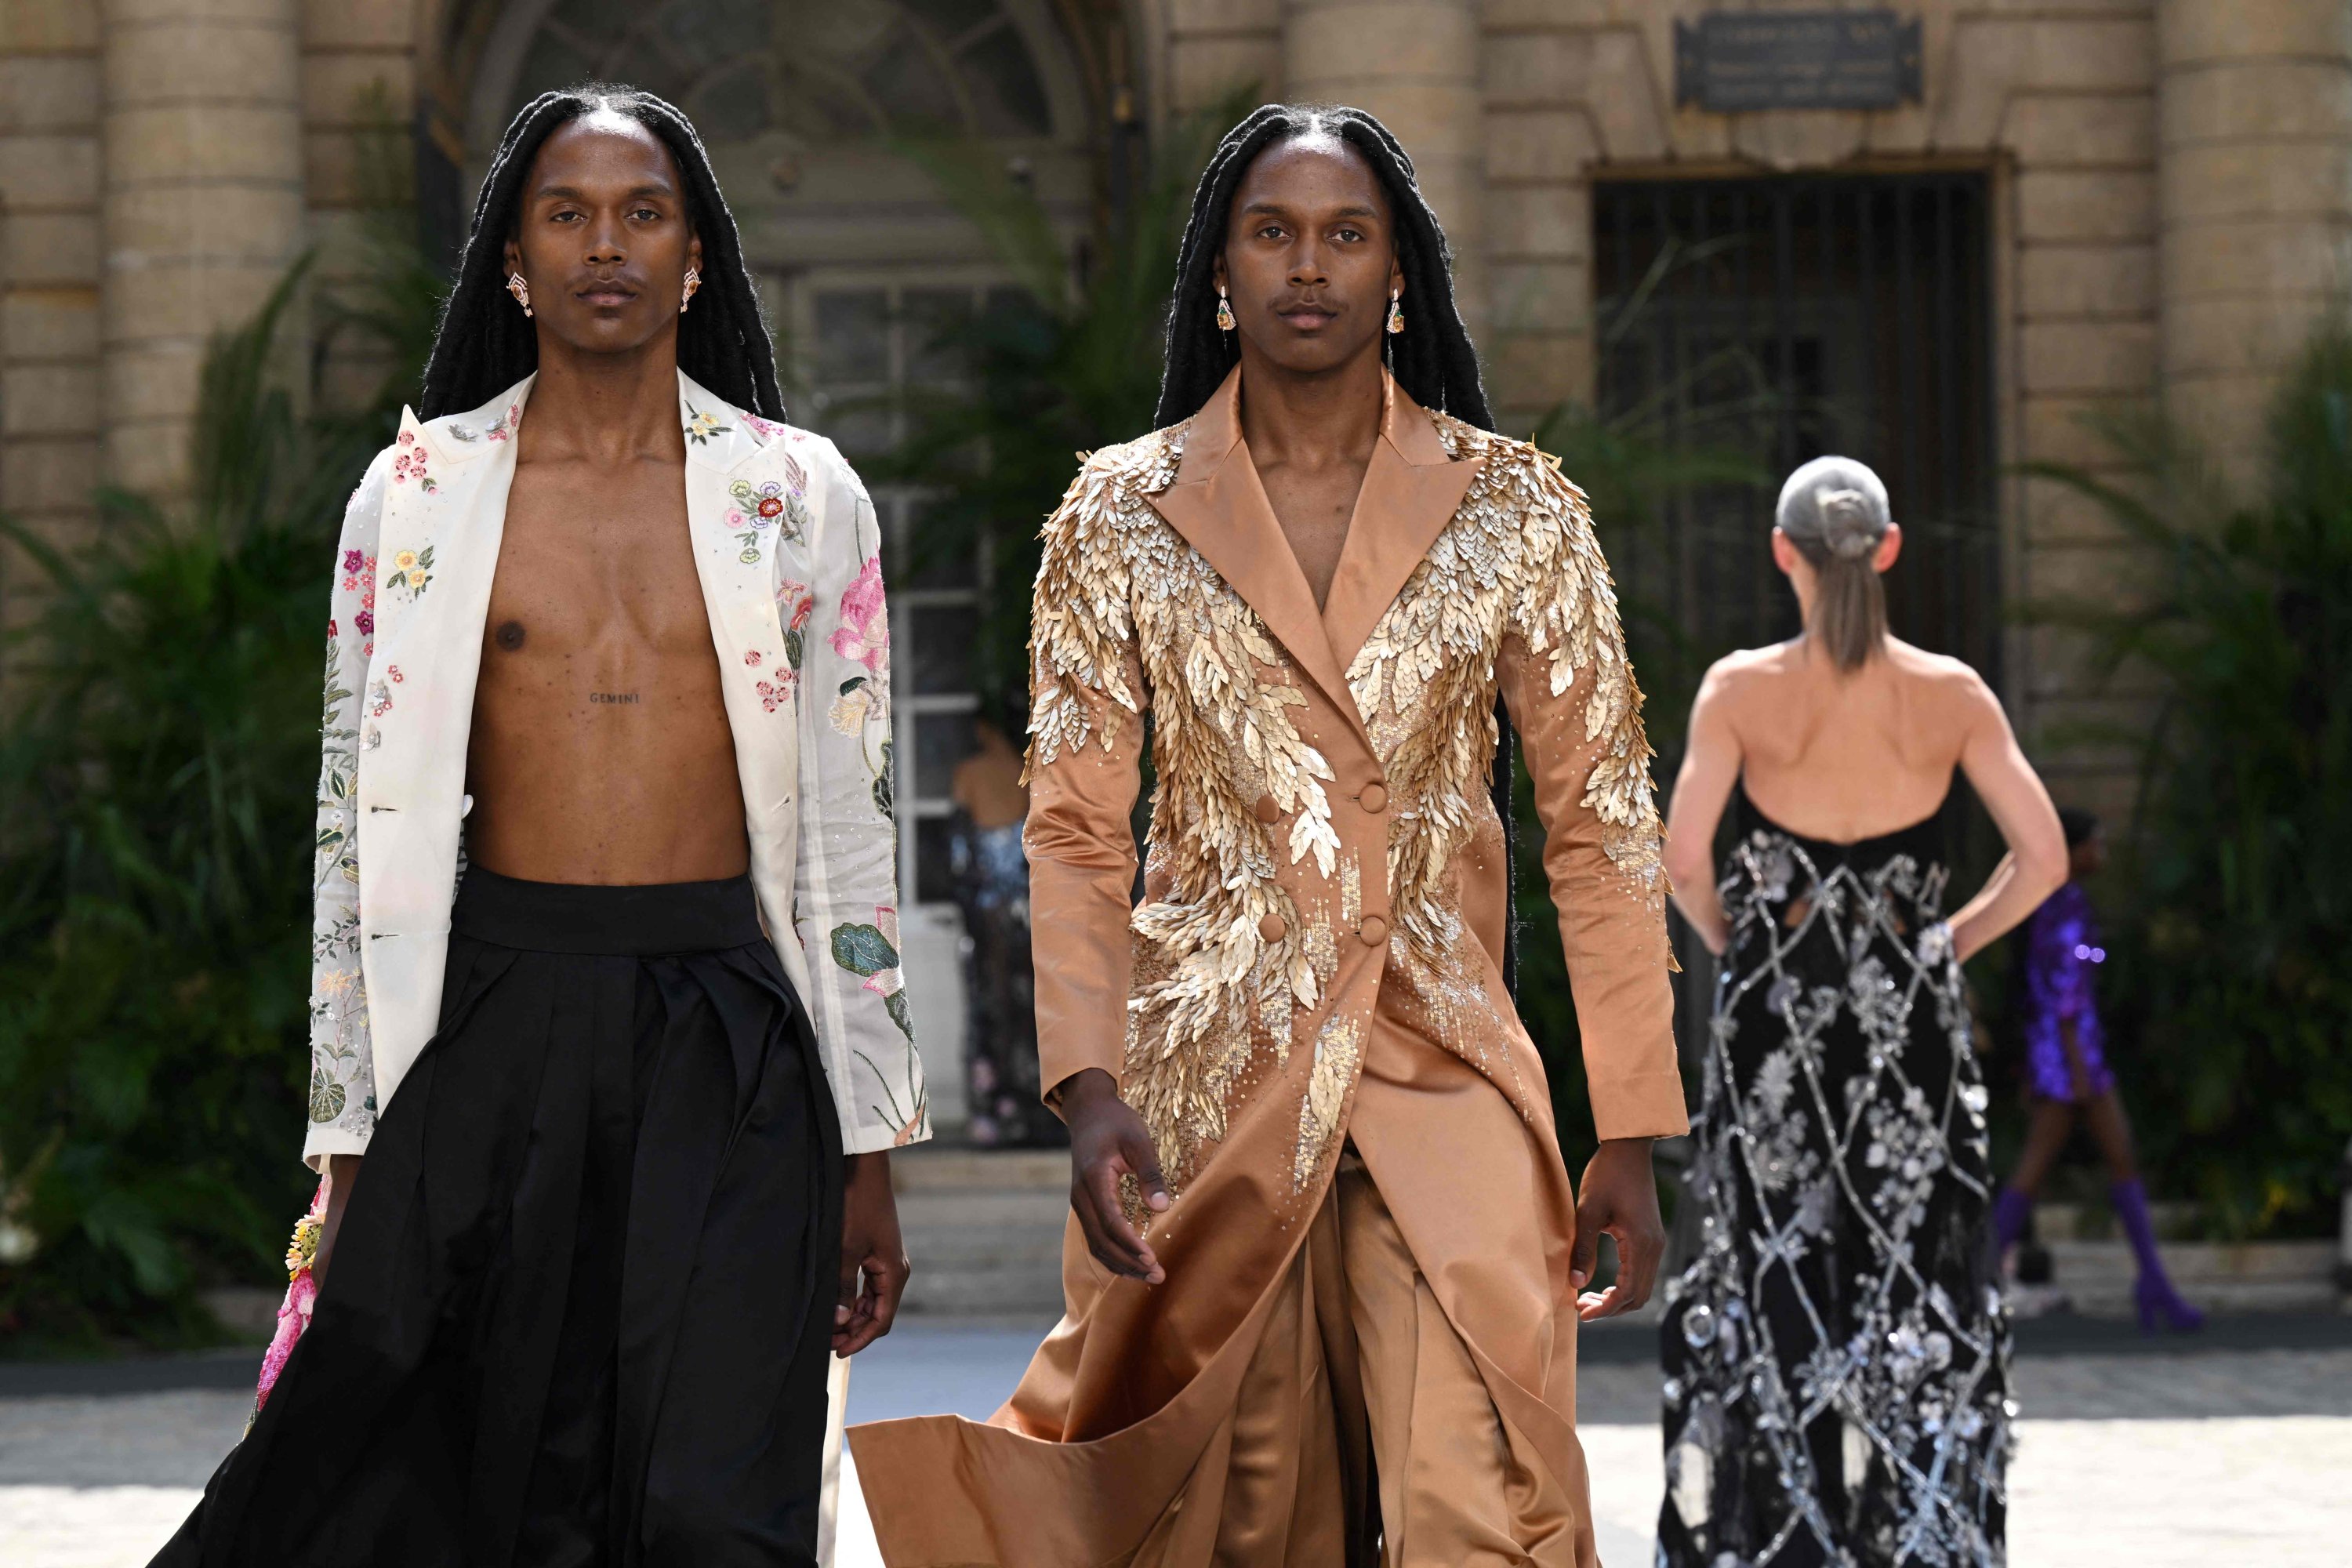 Men's fashion: 'It's time' for men's breakthrough in haute couture